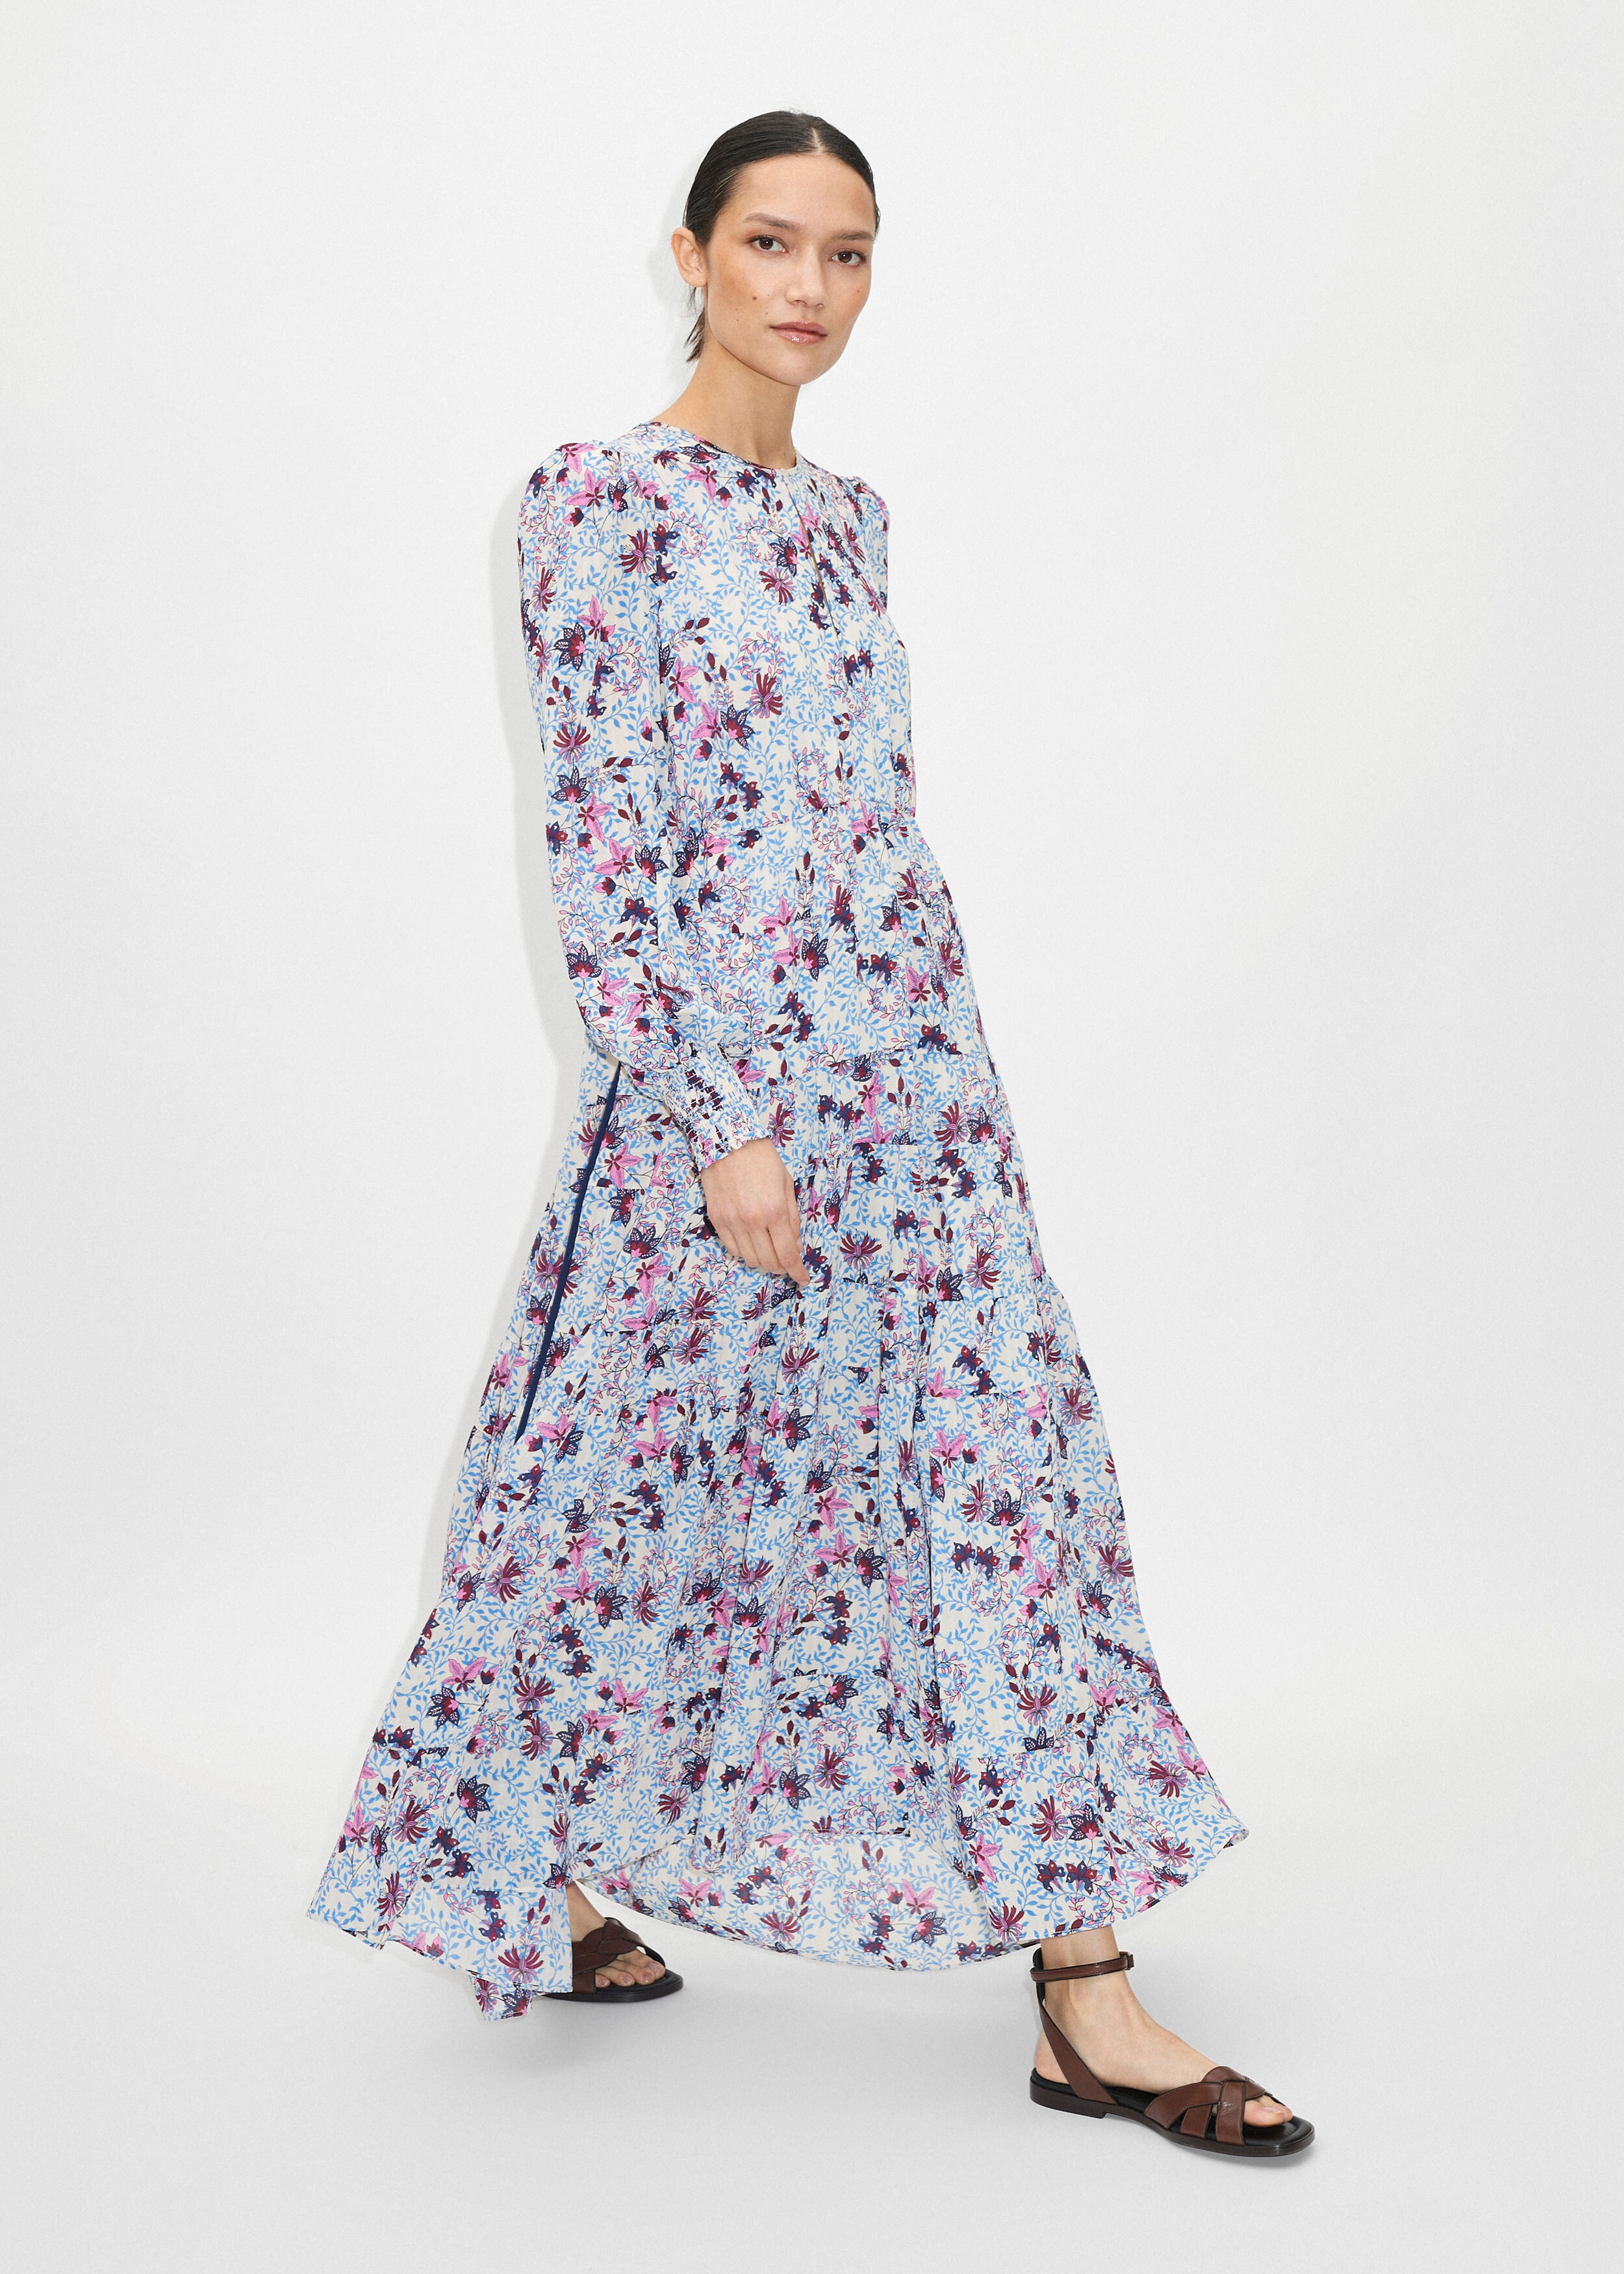 Wild Meadow Print Tiered Maxi Dress + Belt Cream/Blue/Pink